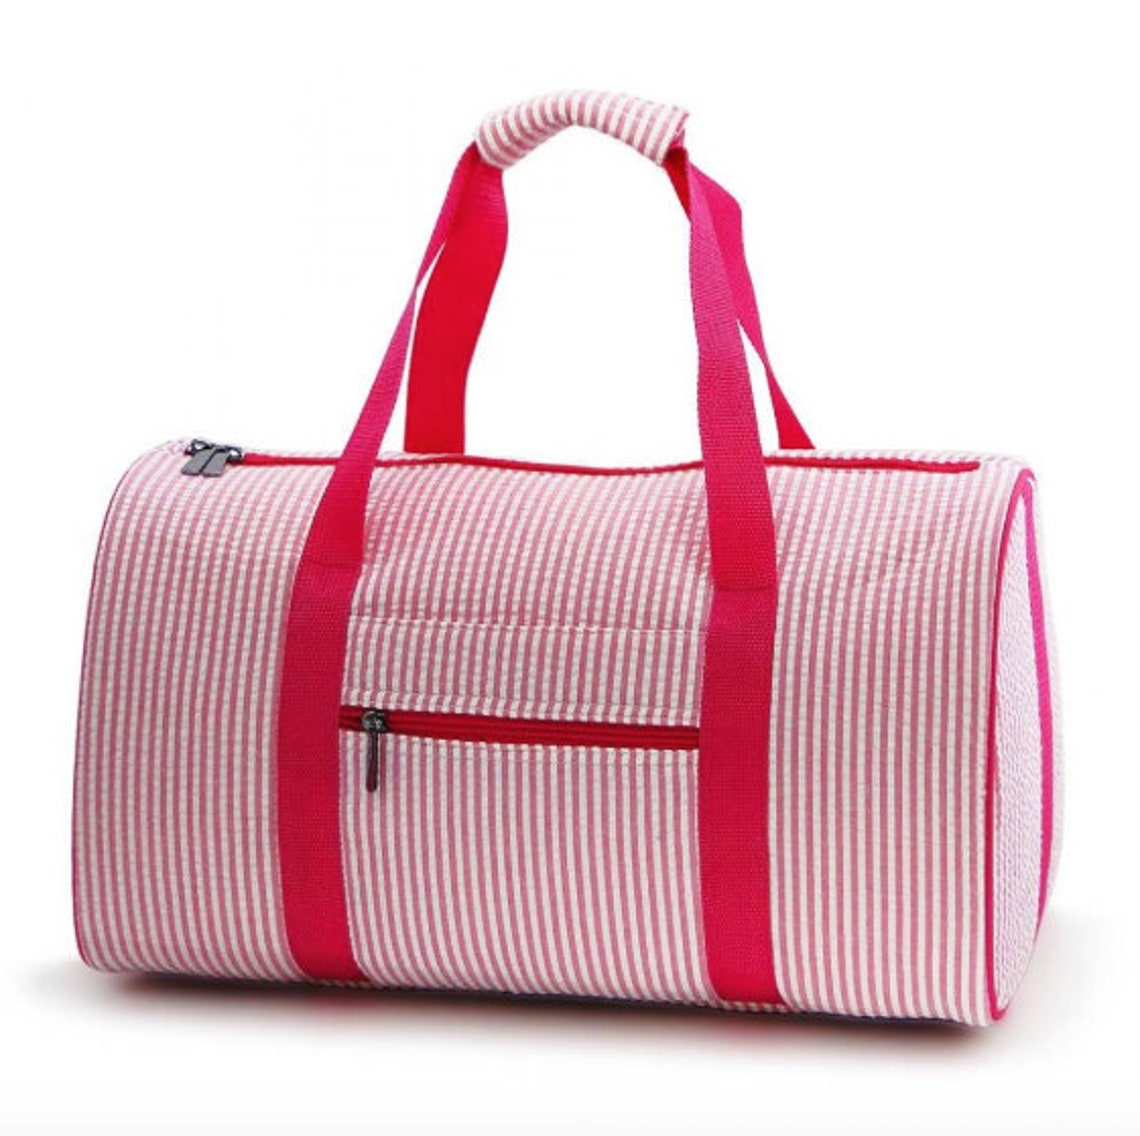 Seersucker Duffle Bag Personalized Duffle Bag Girls Duffle | Etsy